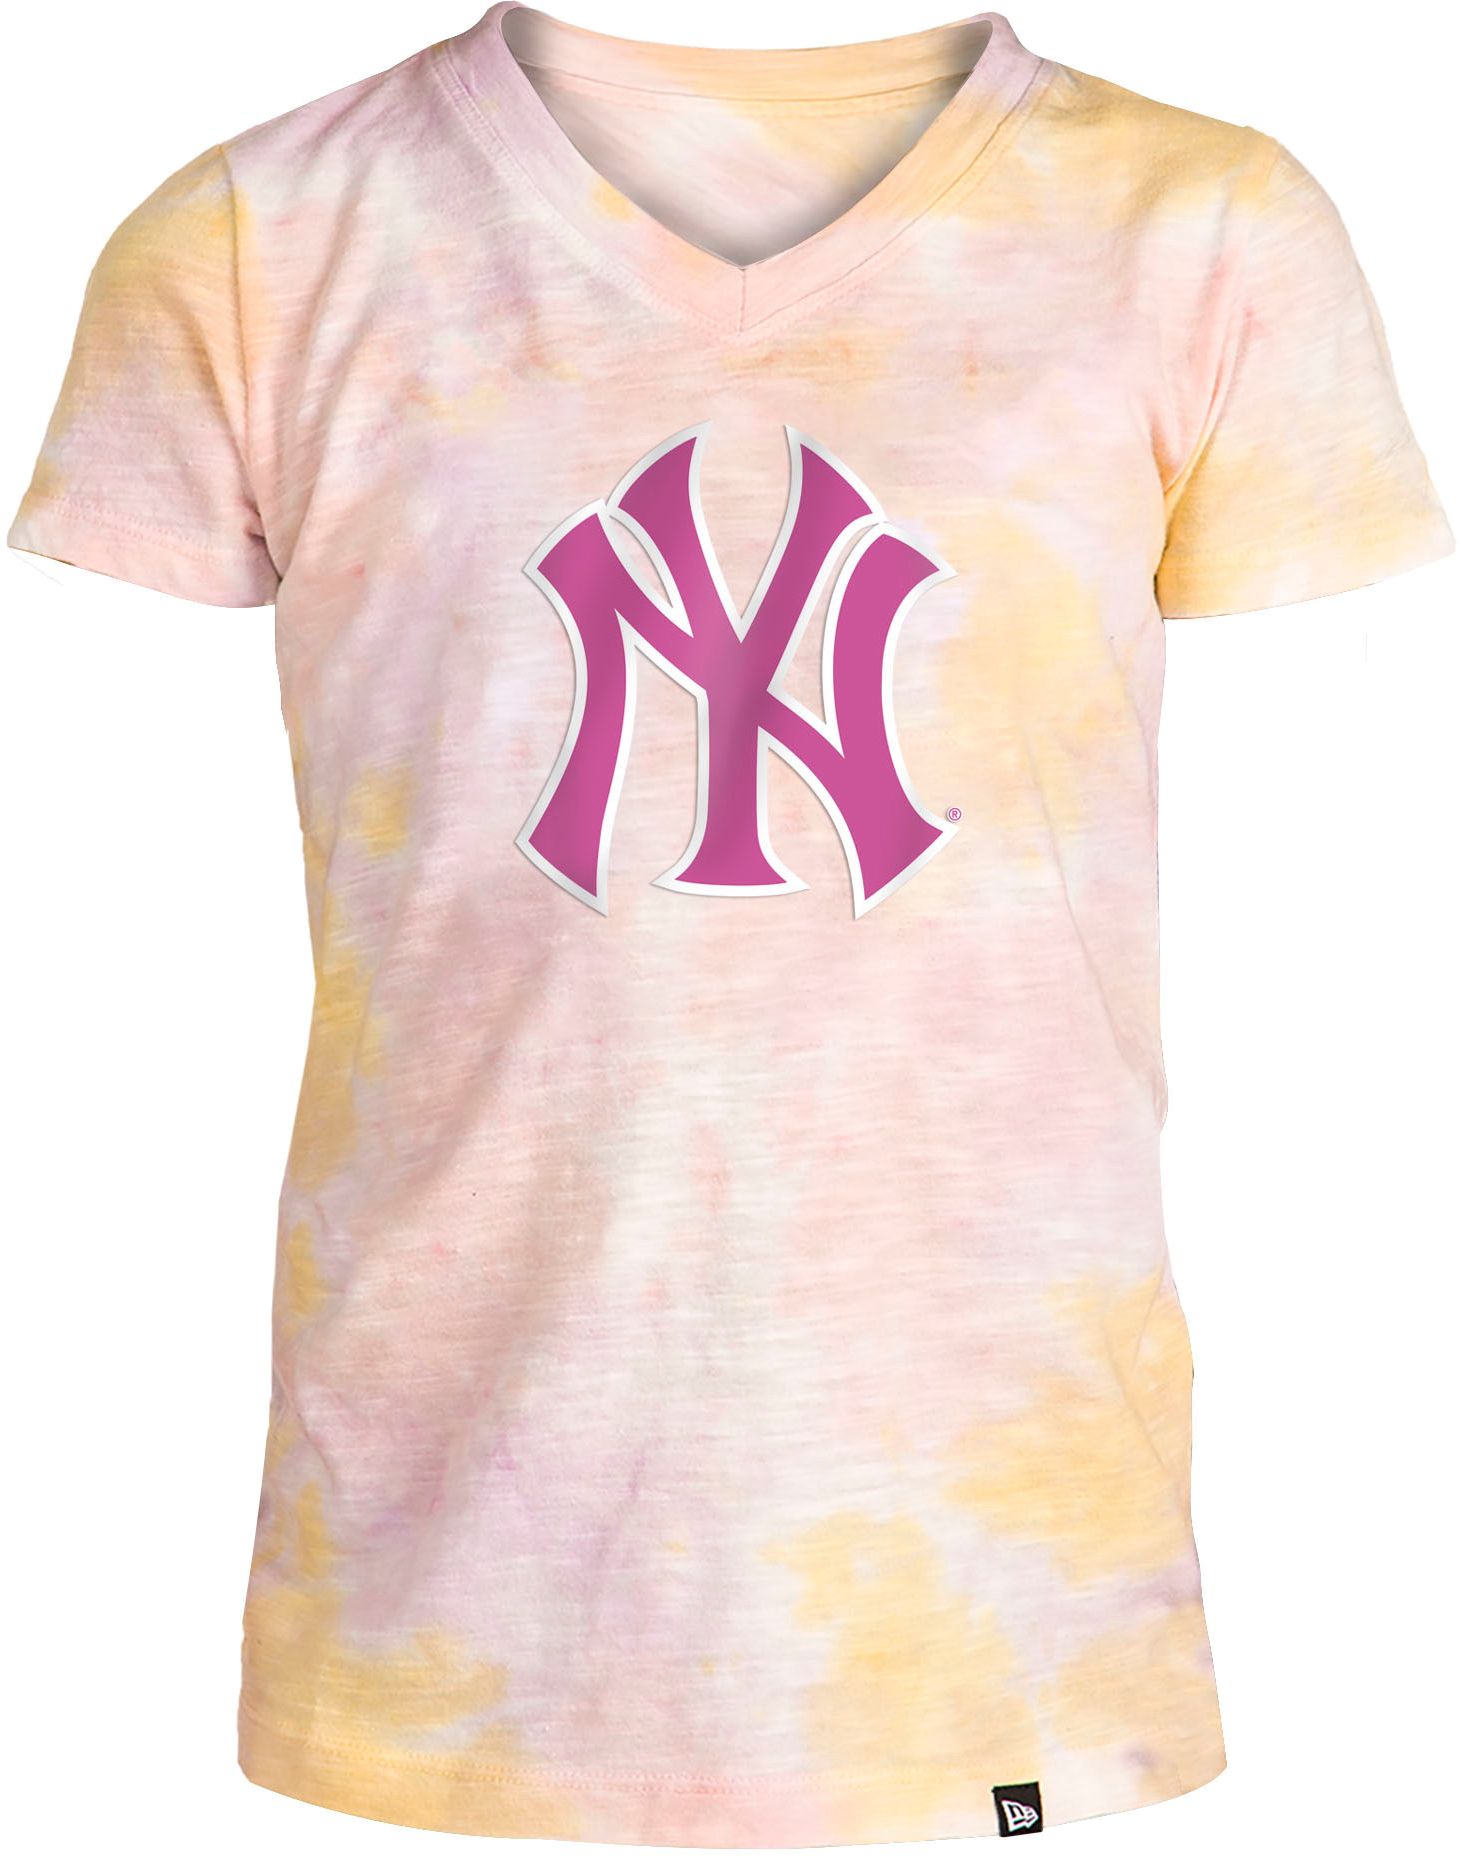 Girl's Youth New Era Pink Pittsburgh Pirates Jersey Stars V-Neck T-Shirt Size: Large